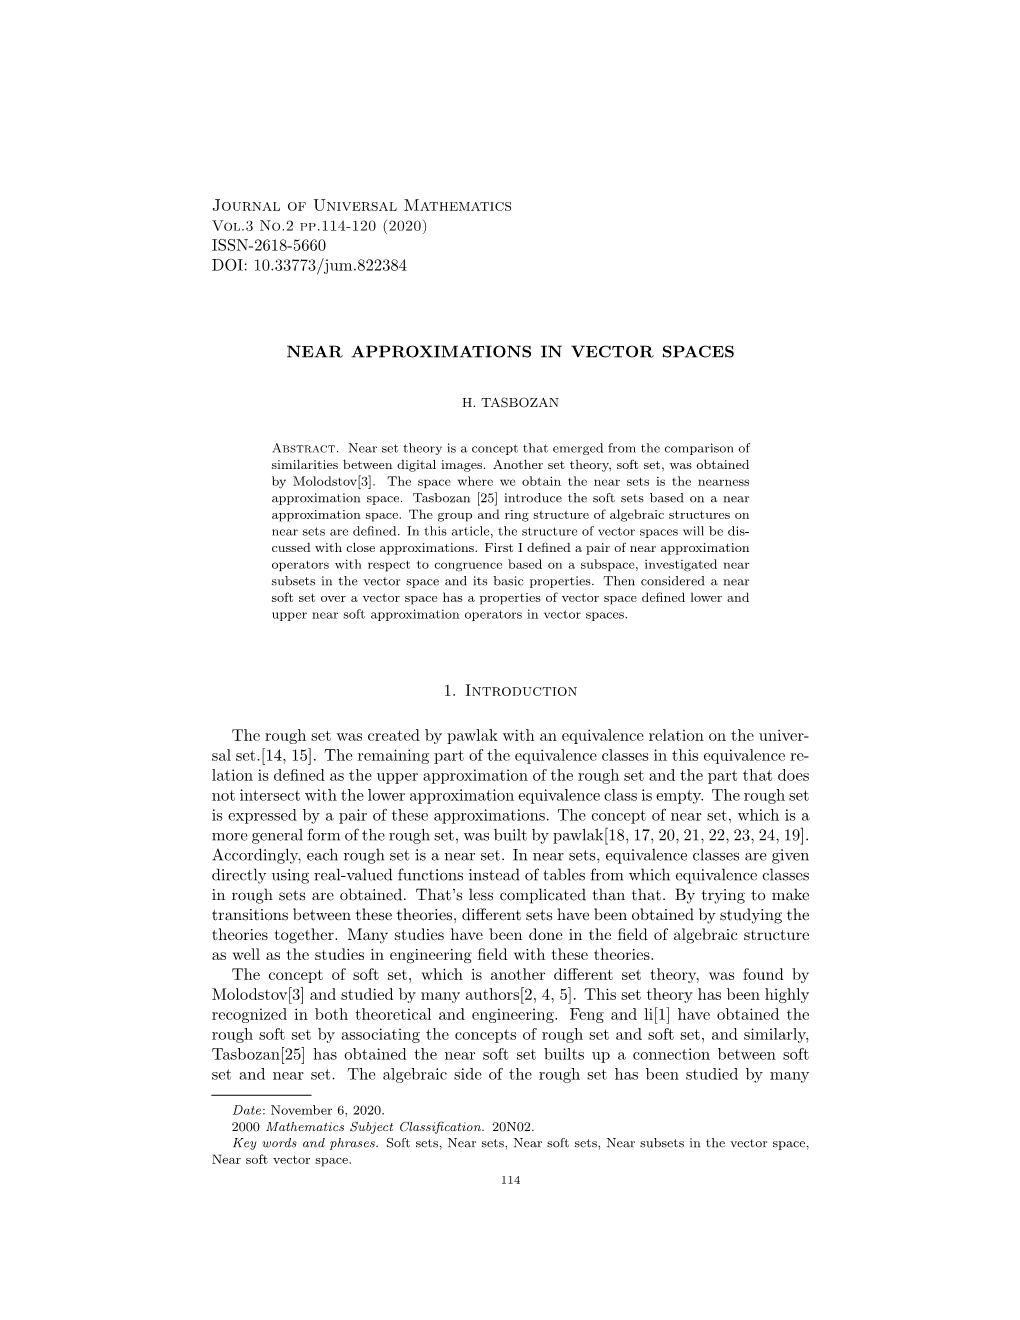 Journal of Universal Mathematics ISSN-2618-5660 DOI: 10.33773